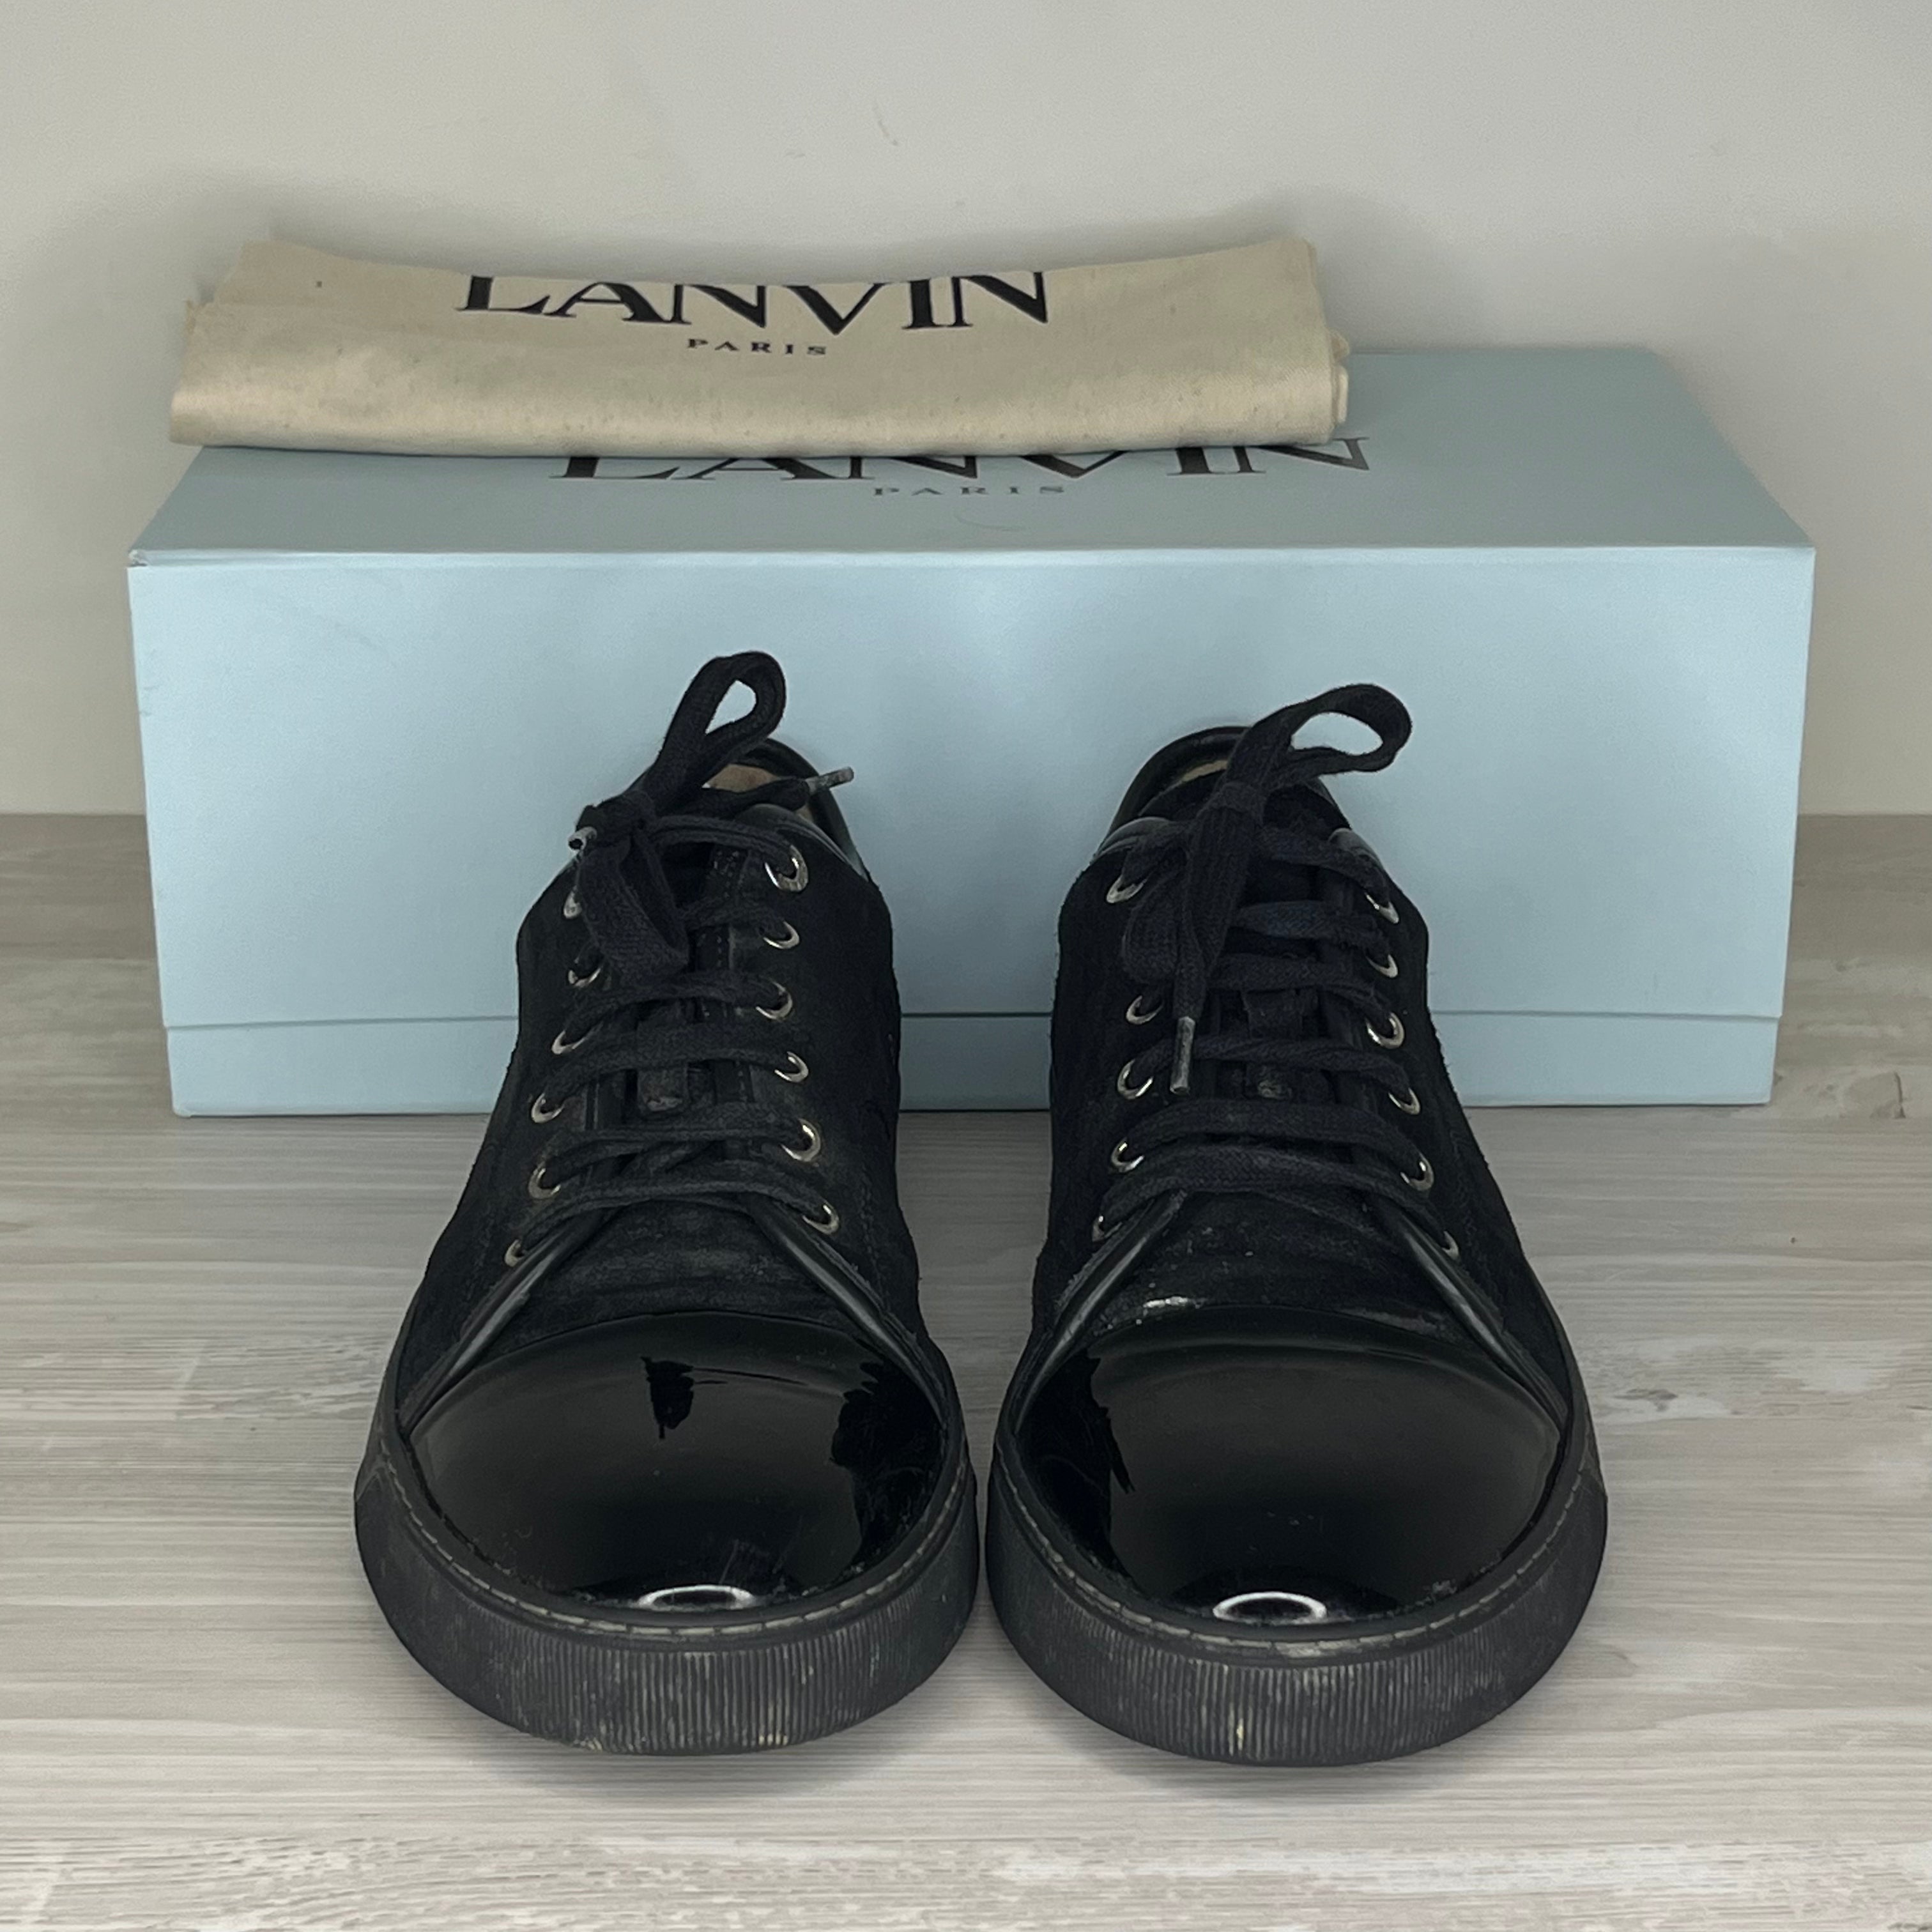 Lanvin Sneakers, 'All Black Suede' Lak Toe (43)